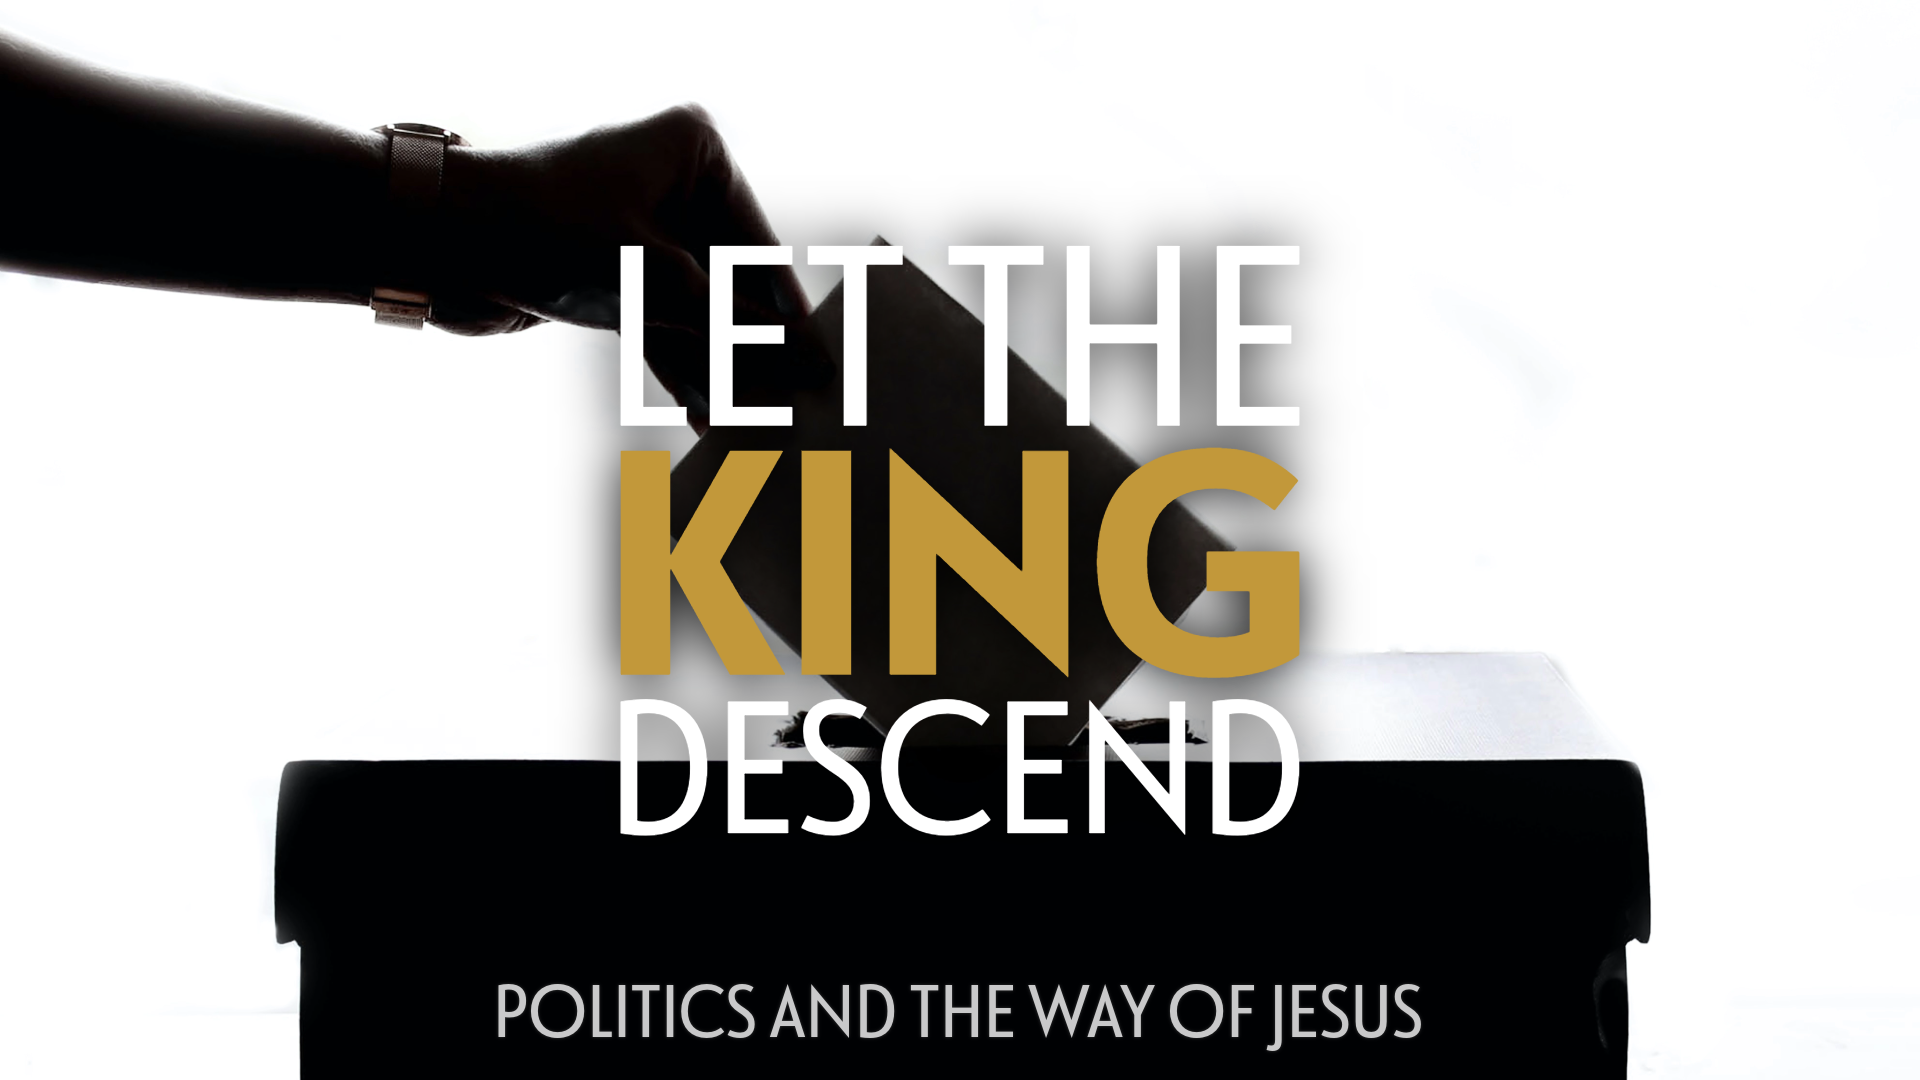 Let The King Descend: Jesus and Politics